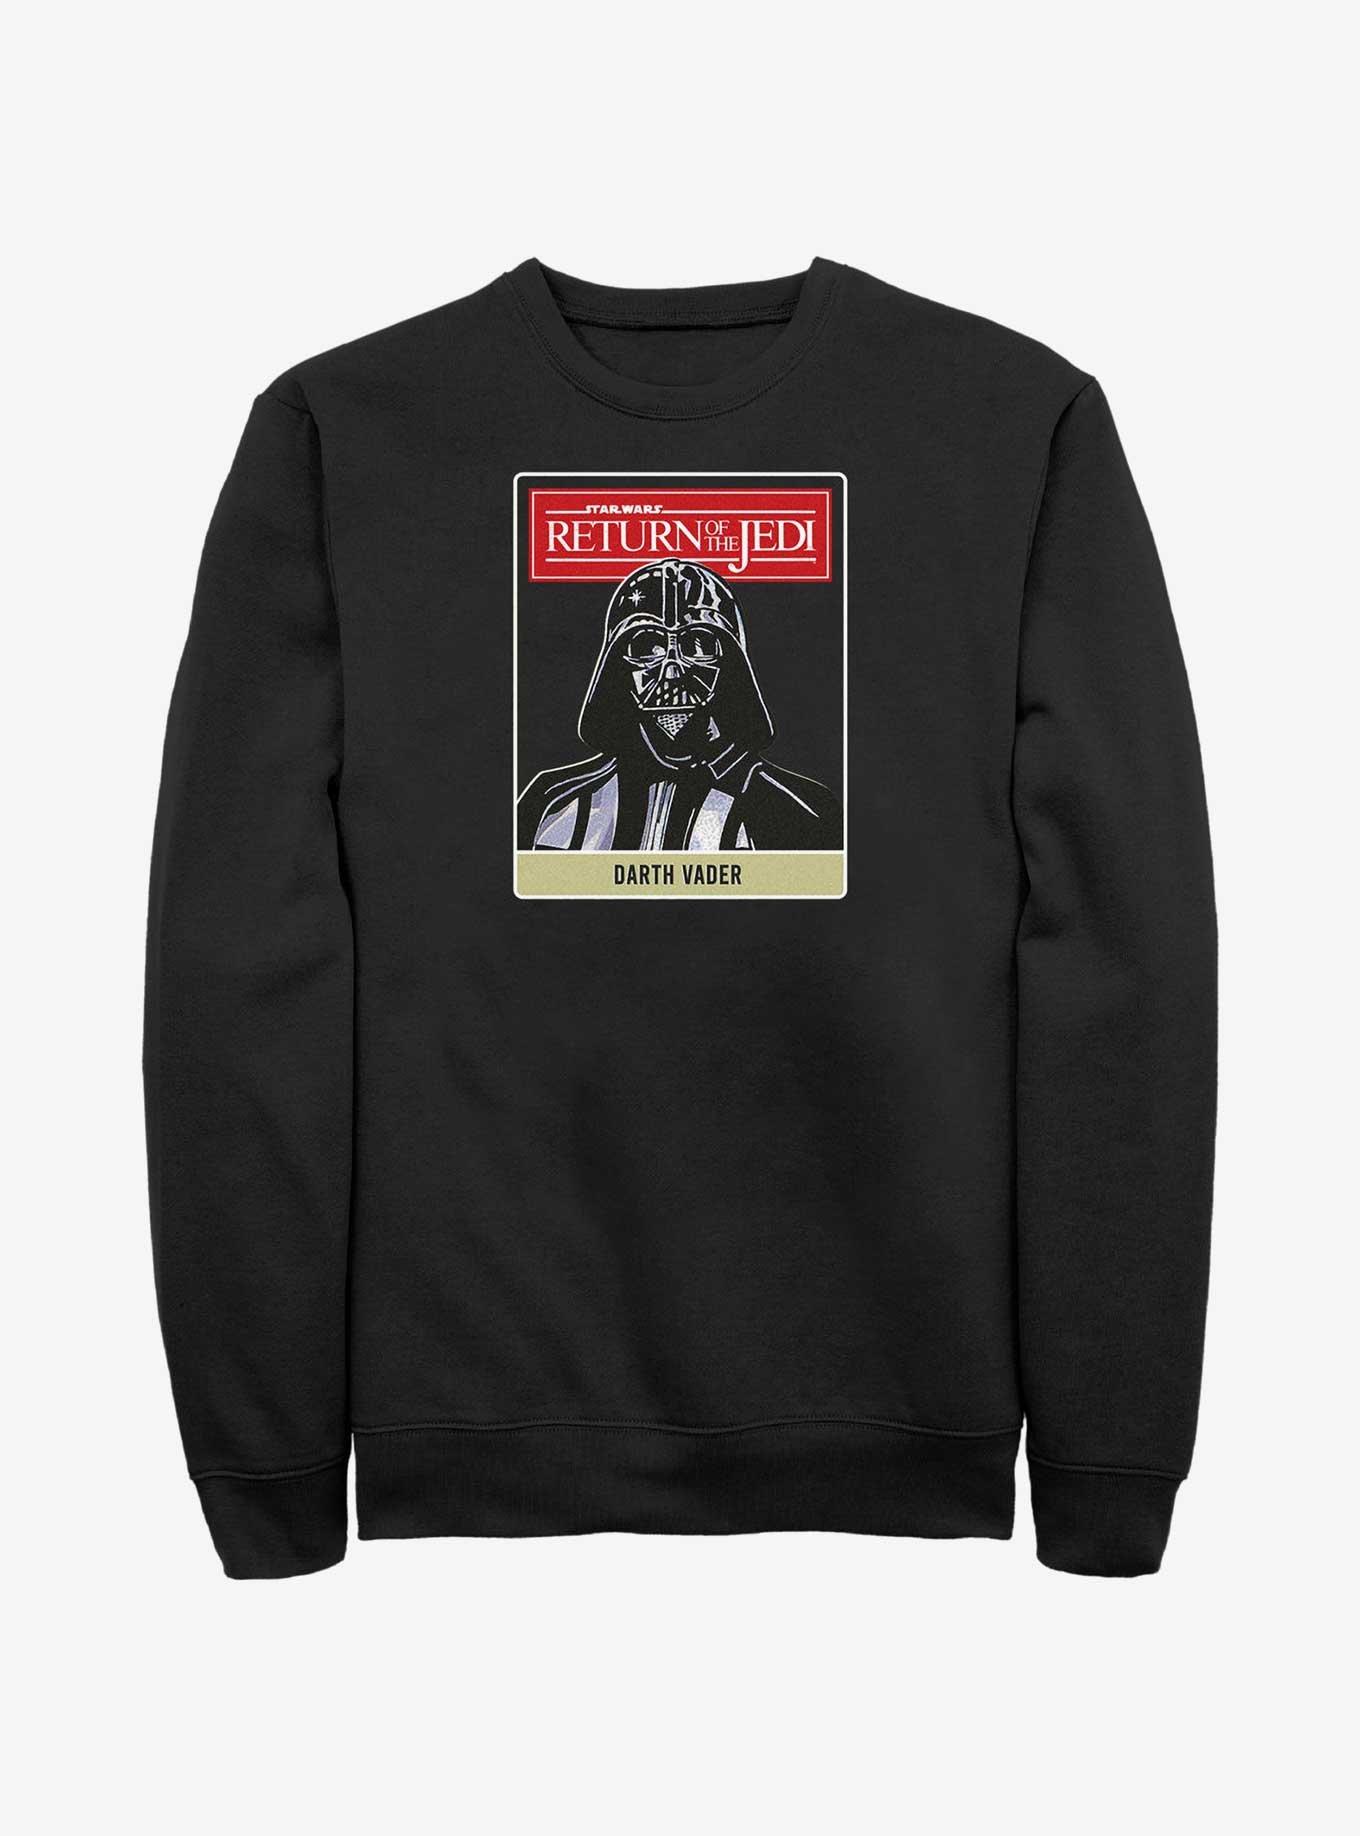 Star Wars Return of the Jedi 40th Anniversary Darth Vader Poster Sweatshirt